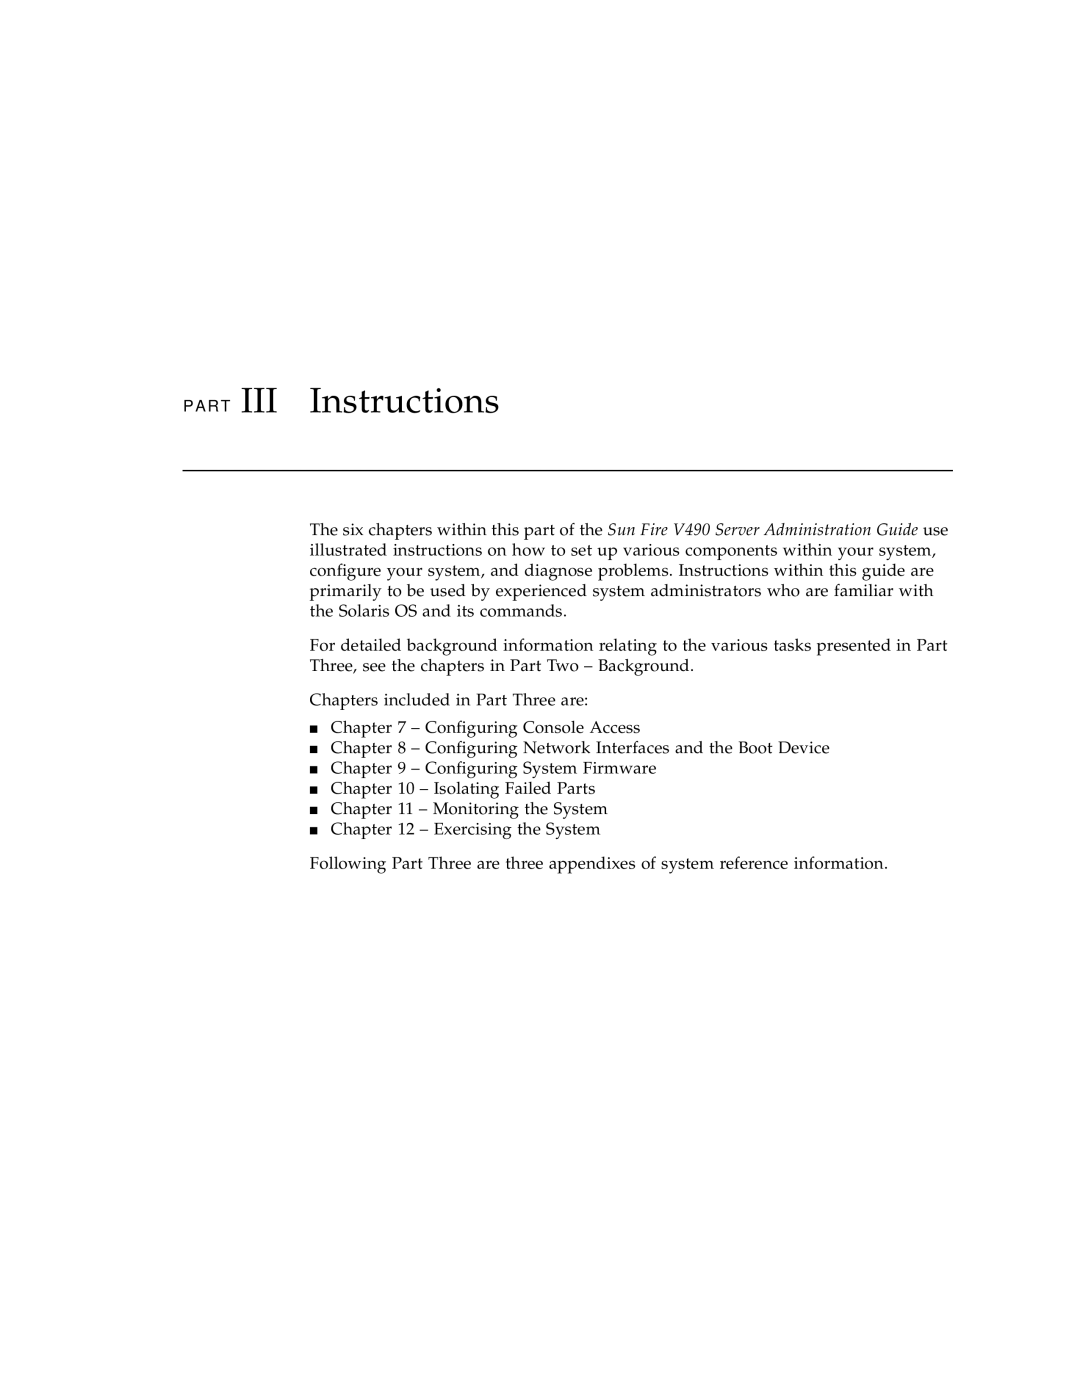 Sun Microsystems V490 manual R T III Instructions 